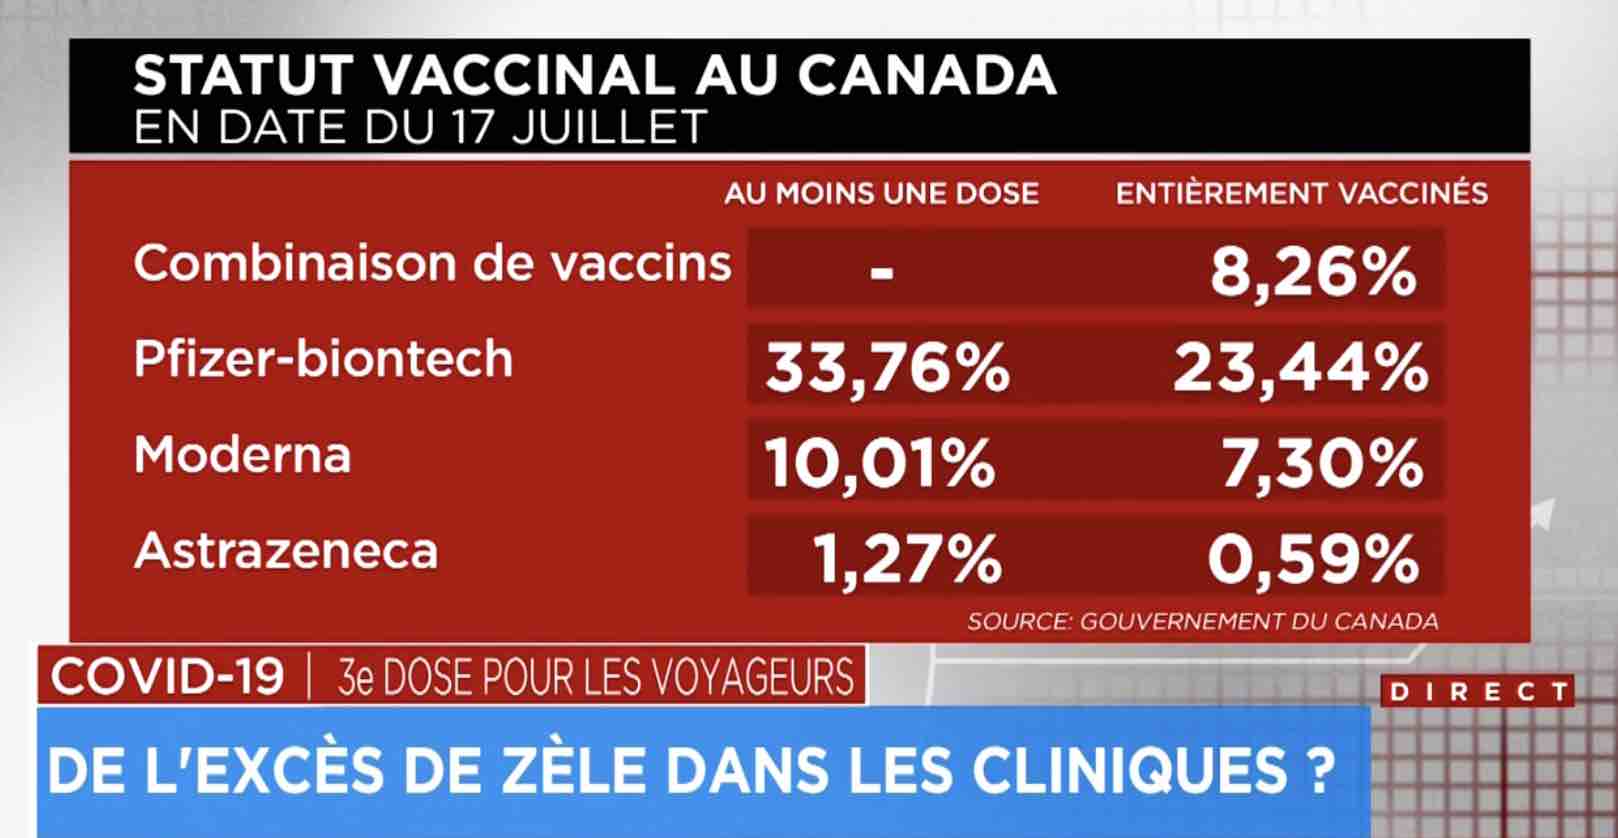 statut-vaccinal-au-canada-en-date-du-17-juillet-2021.jpg